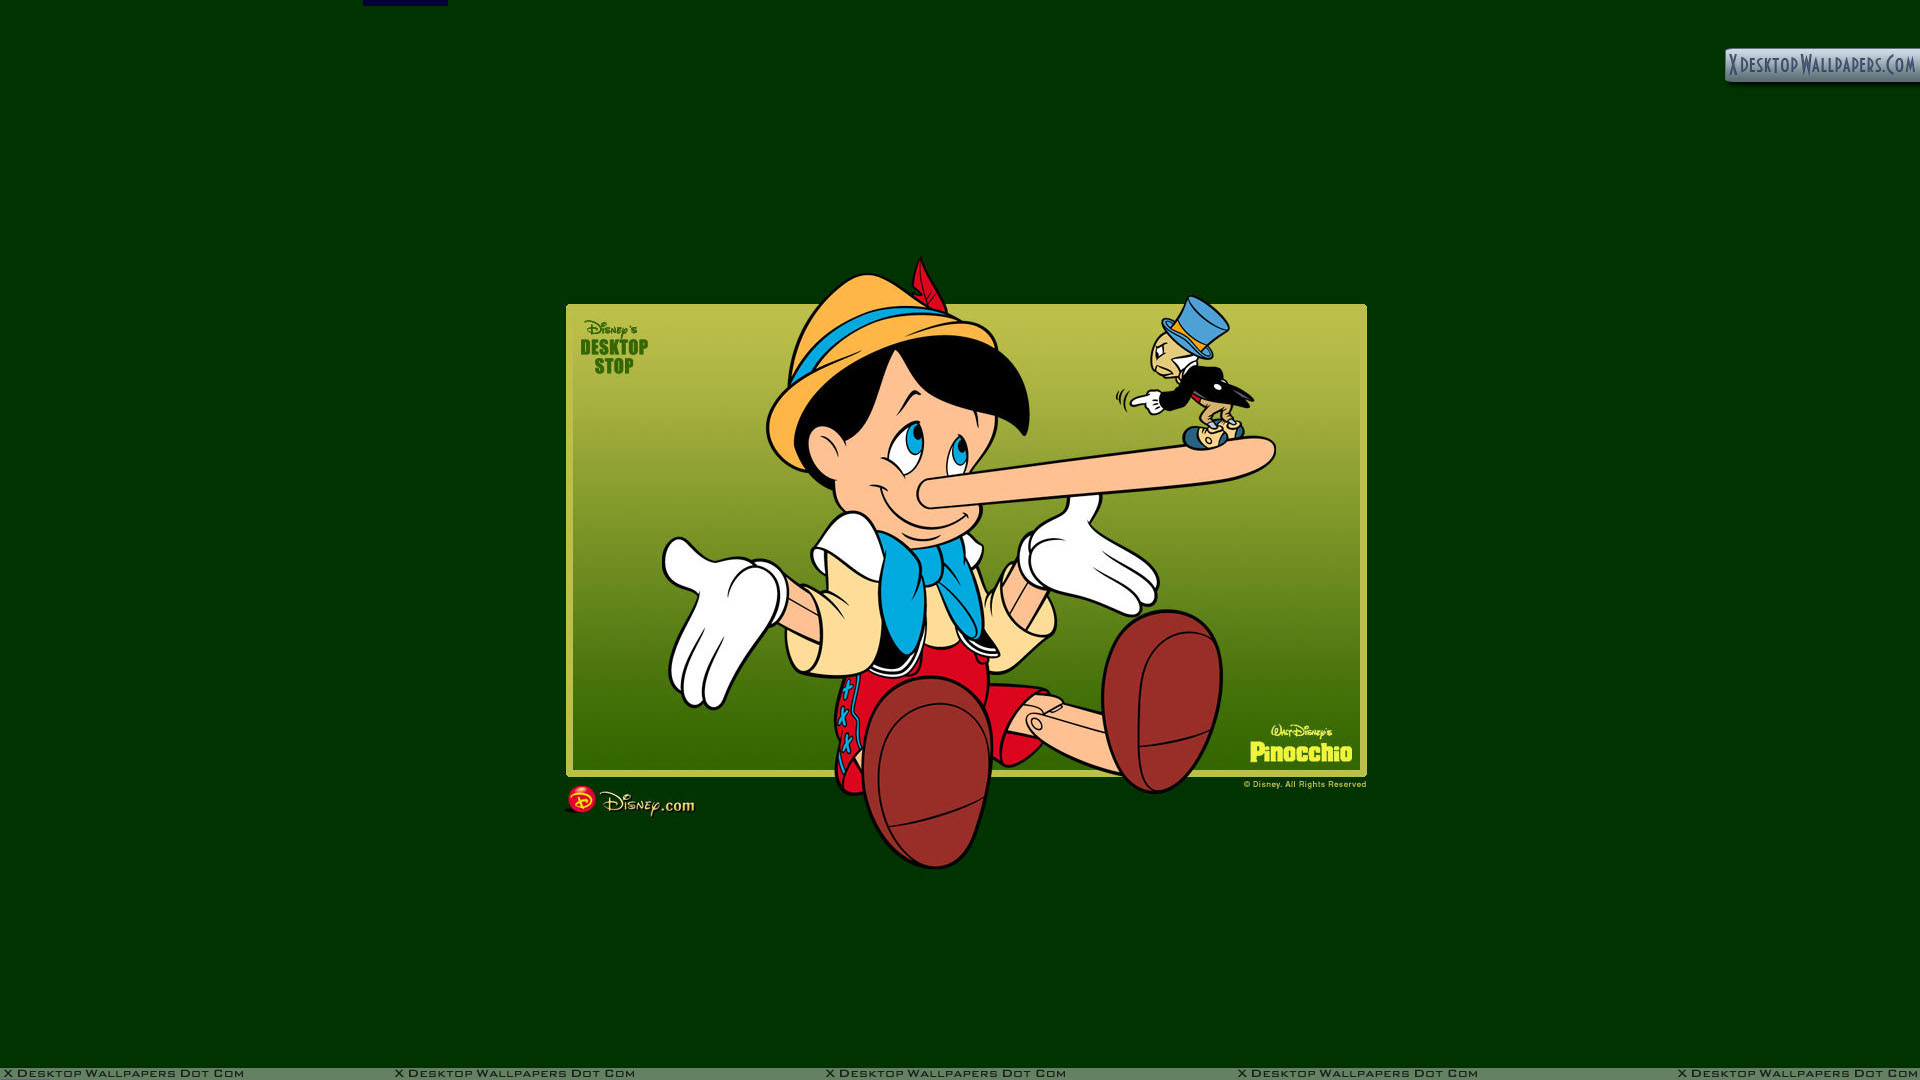 Pinocchio Green Background Wallpaper